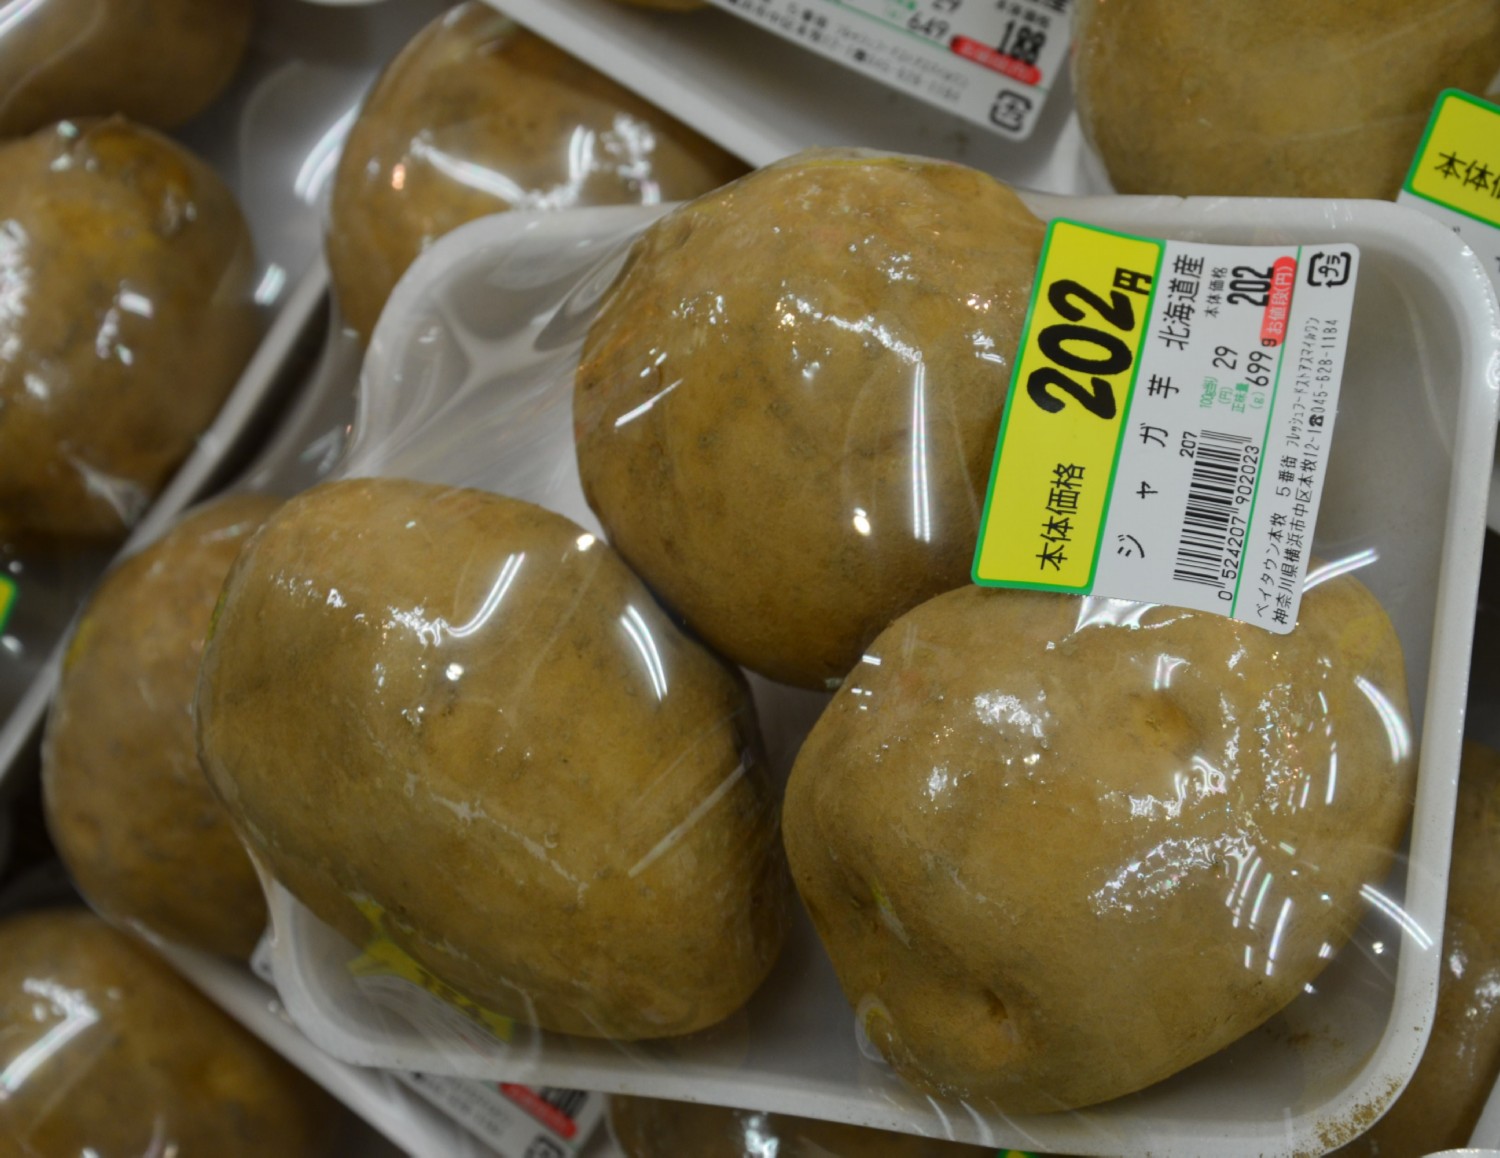 3 db. krumpli 1.7 Euro<br />= 544 Ft.,<br />= 7.8 lej